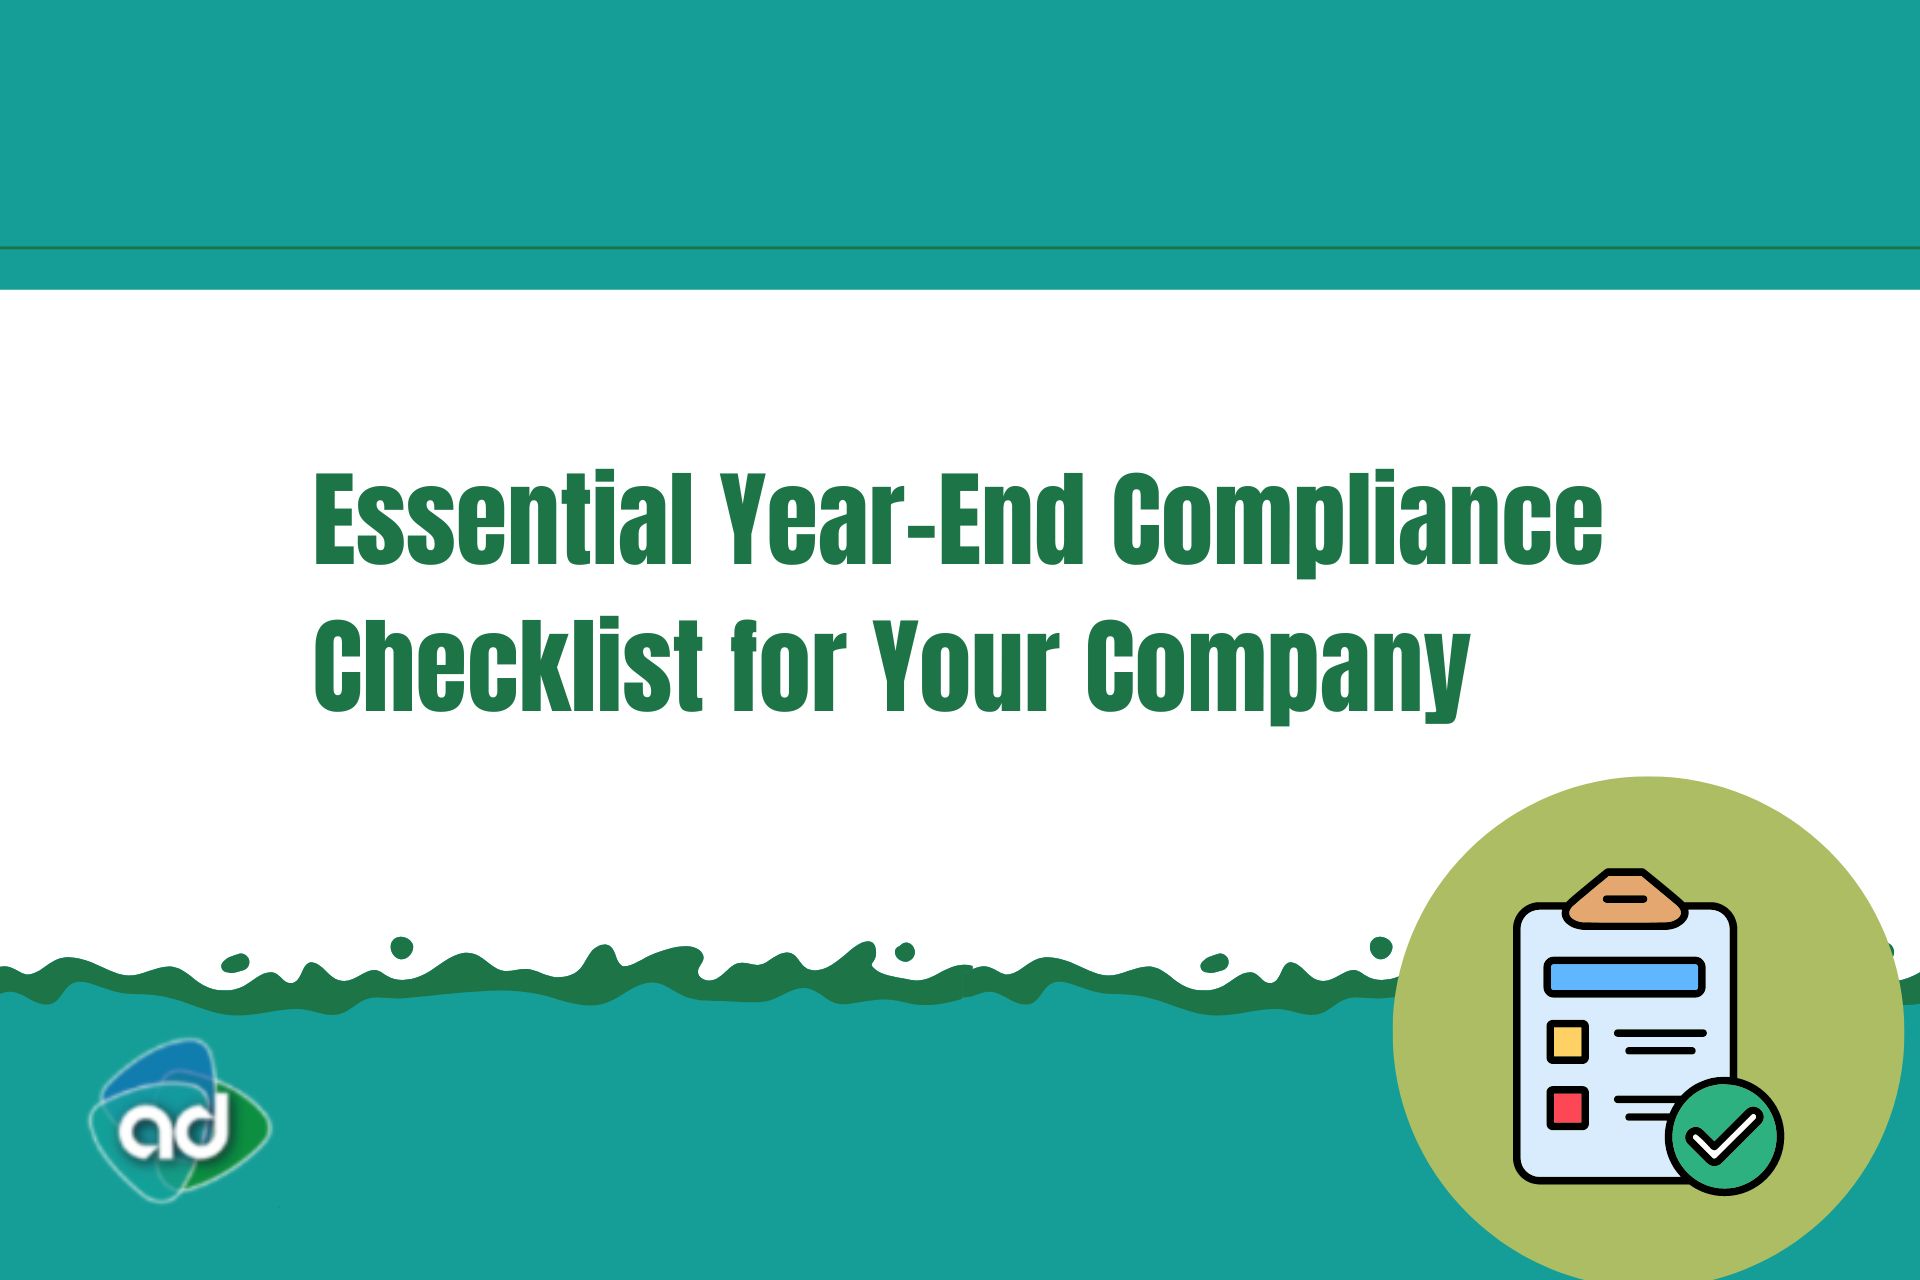 Compliance Checklist